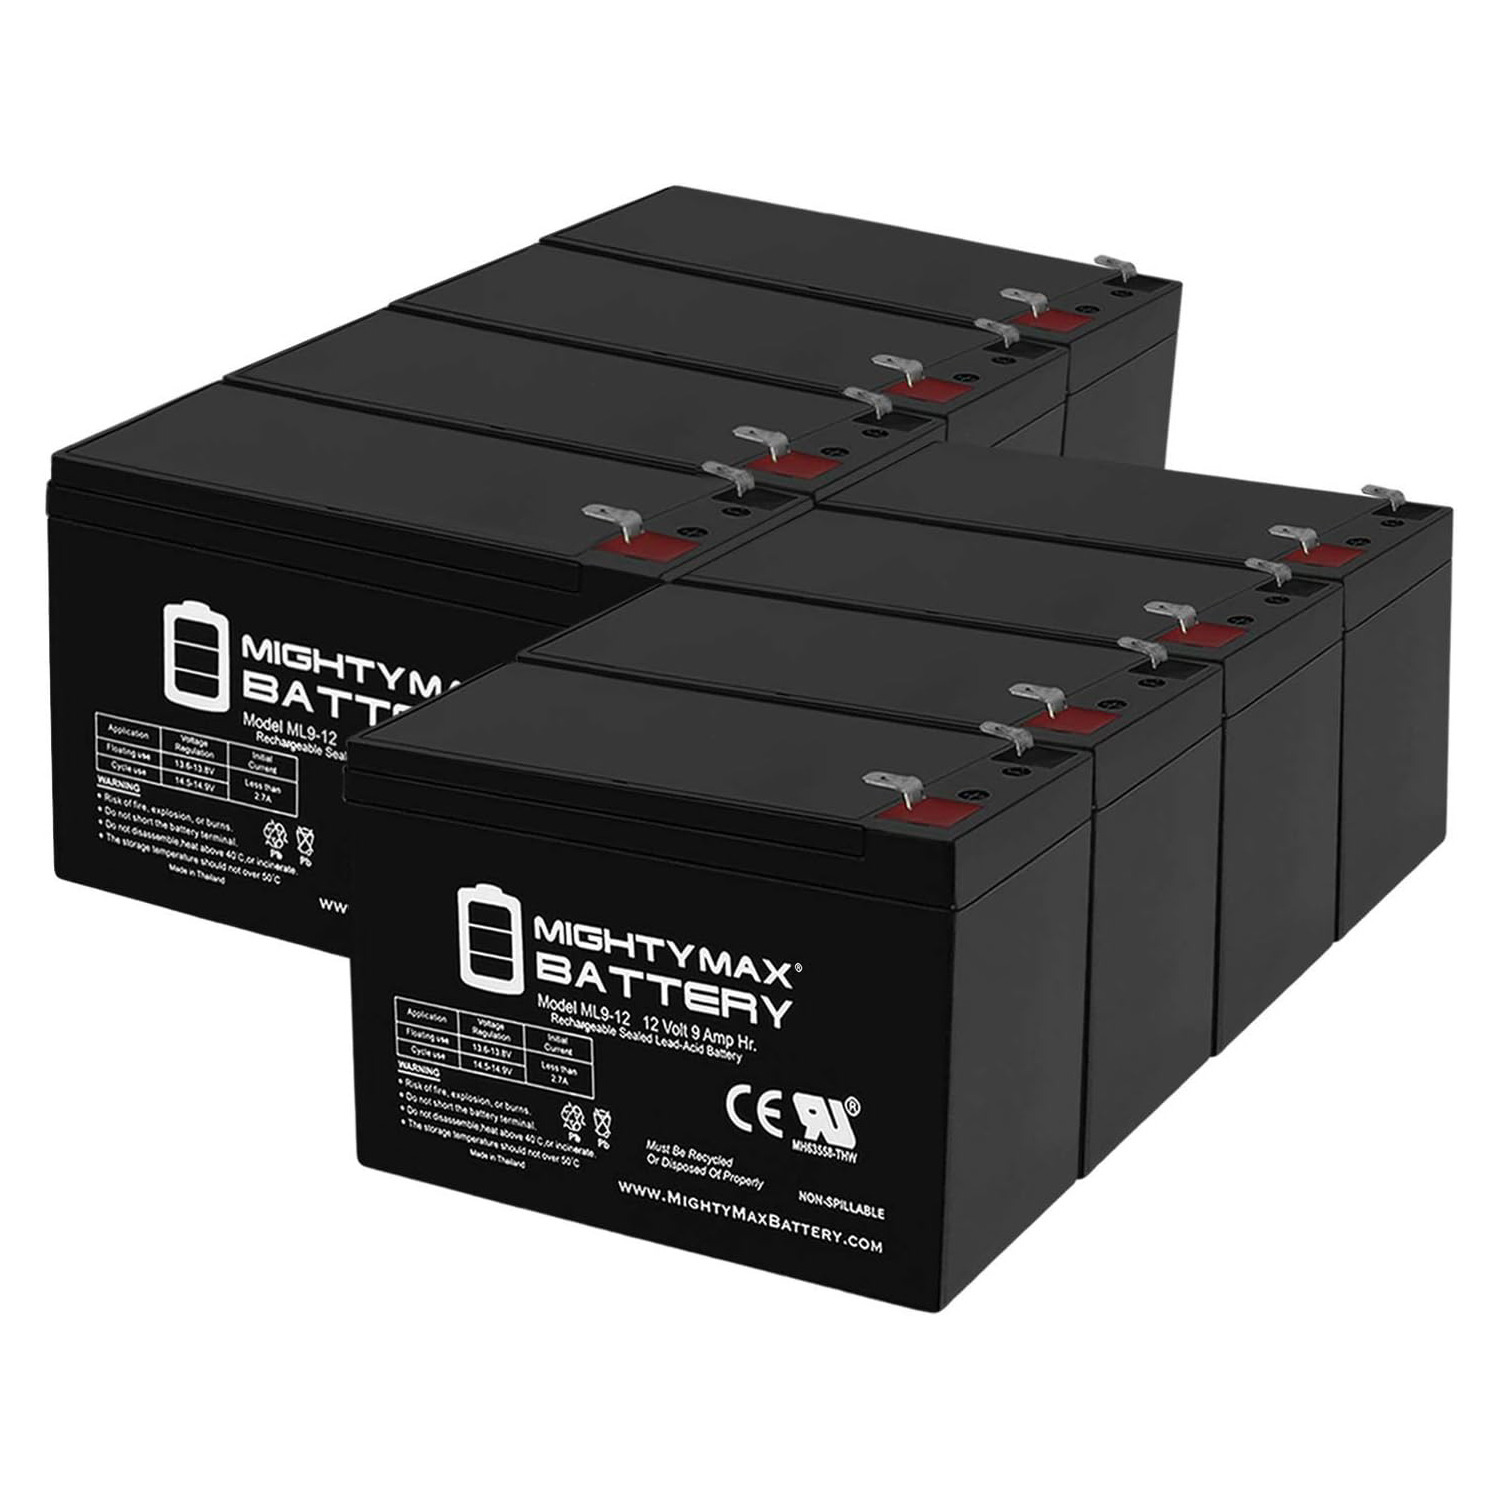 Altronix SMP3PMP8 12V, 9Ah Lead Acid Battery - 8 Pack